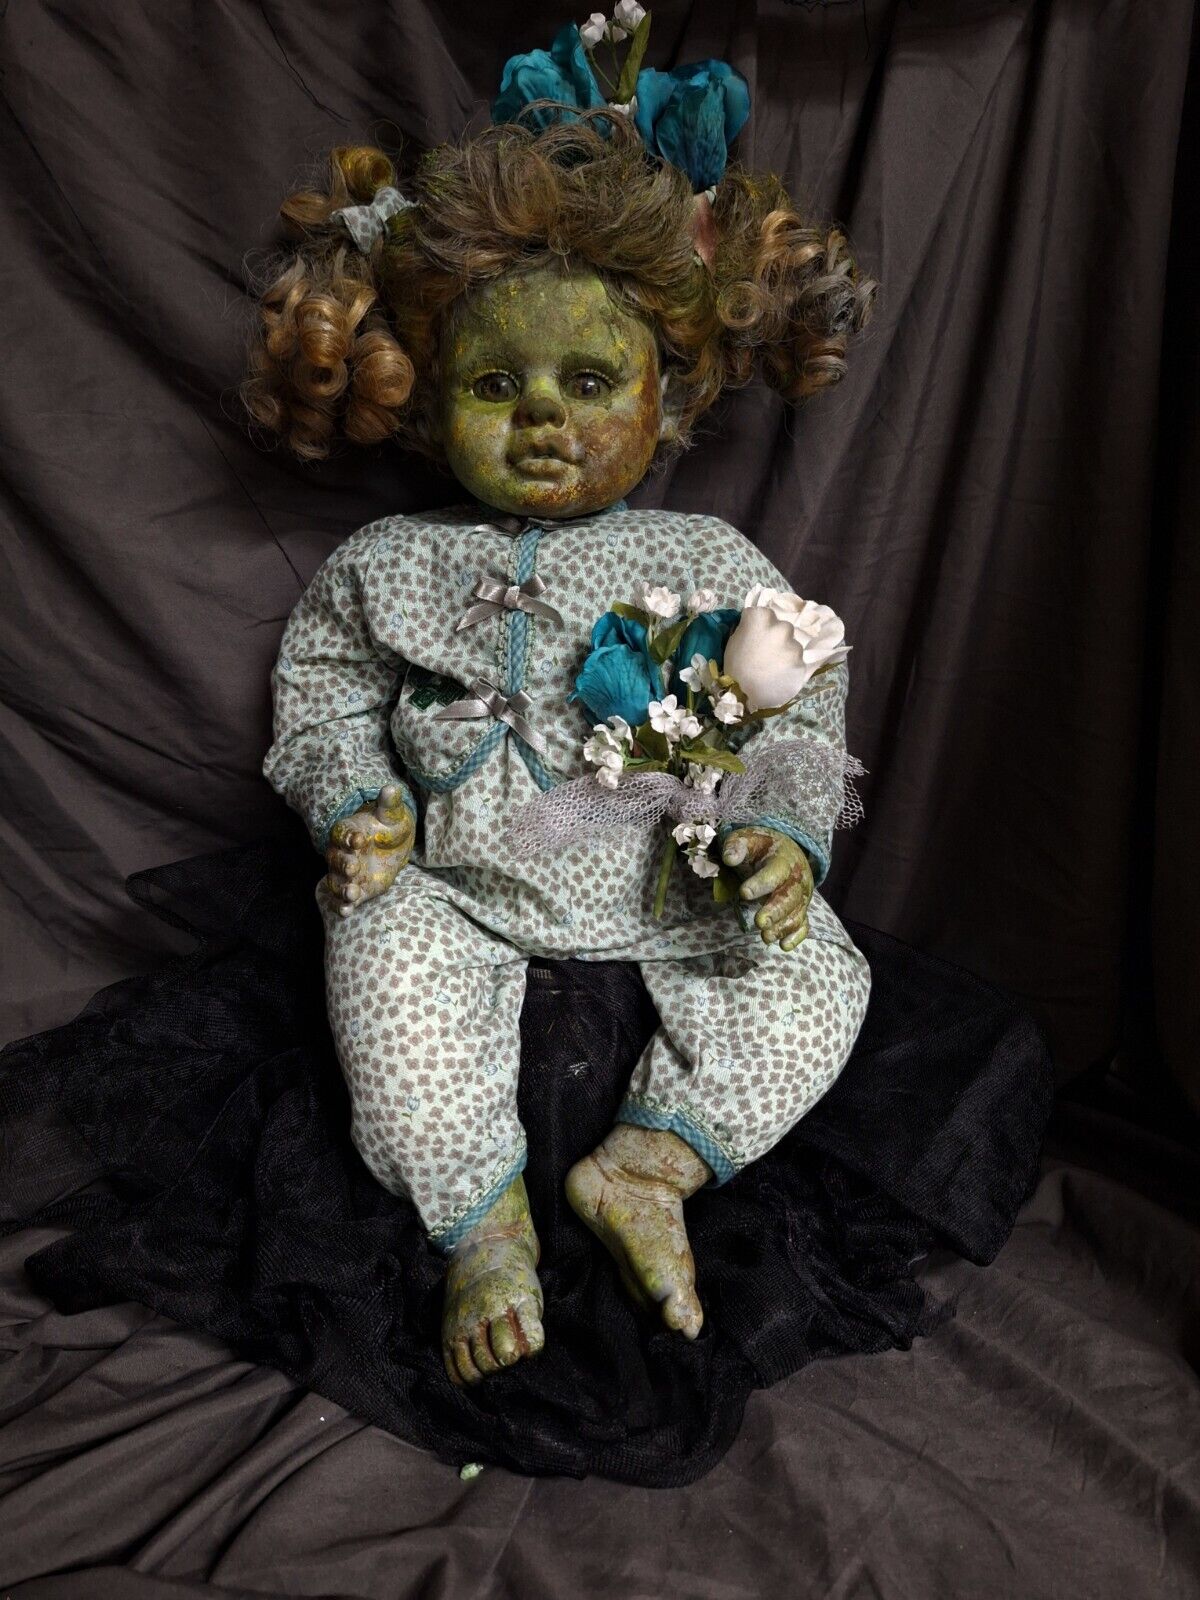 OOAK Creepy Doll 20 In Tall Handpainted Halloween Prob